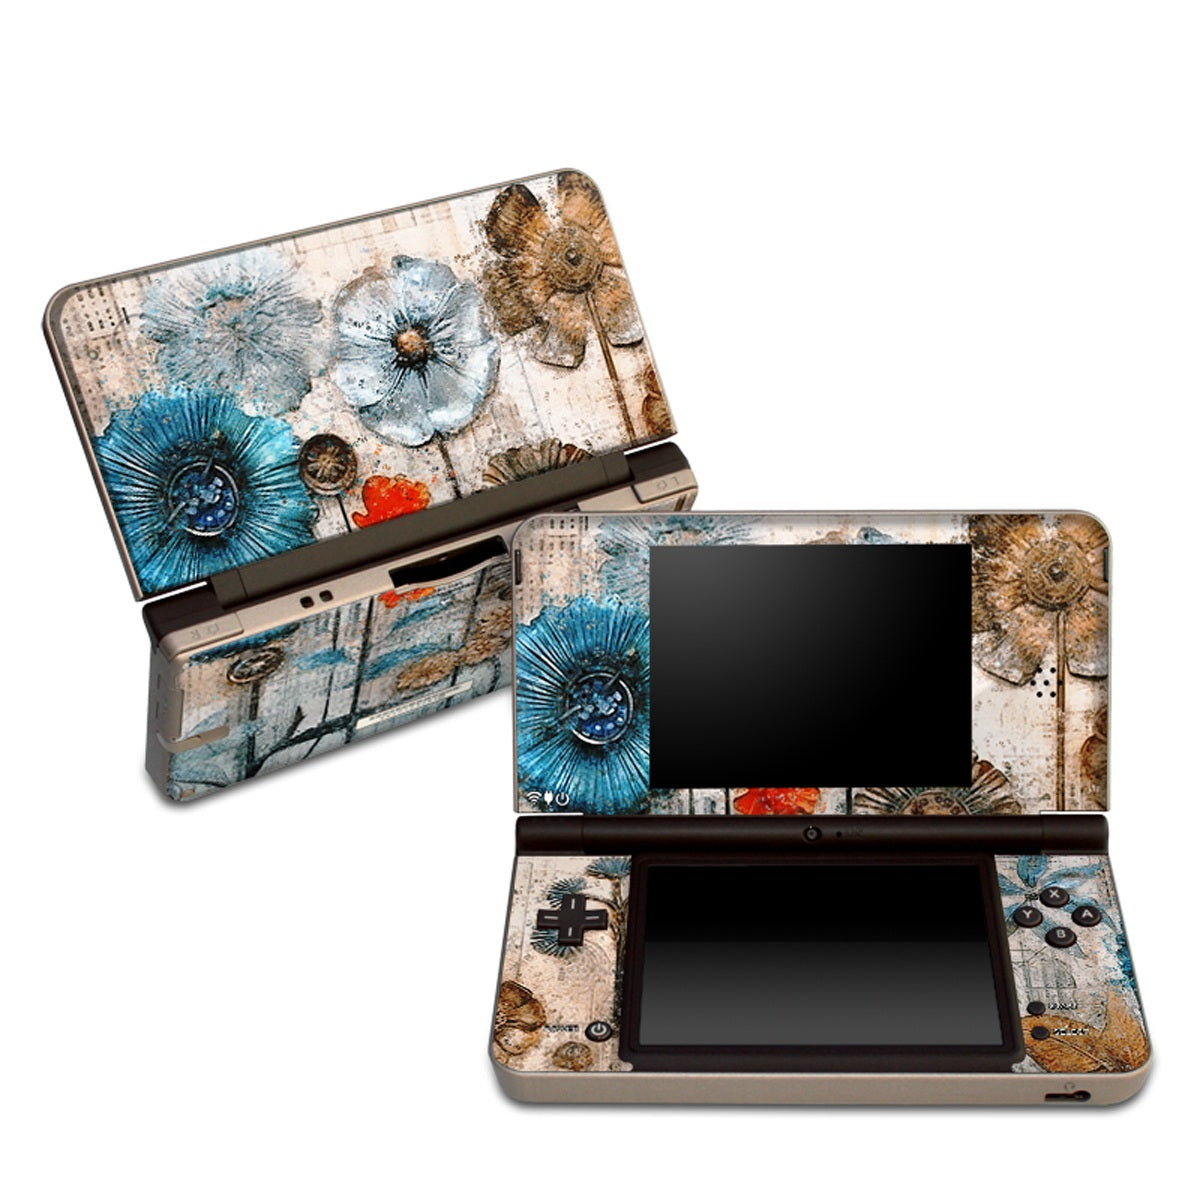 Steampunk Flowers - Nintendo DSi XL Skin